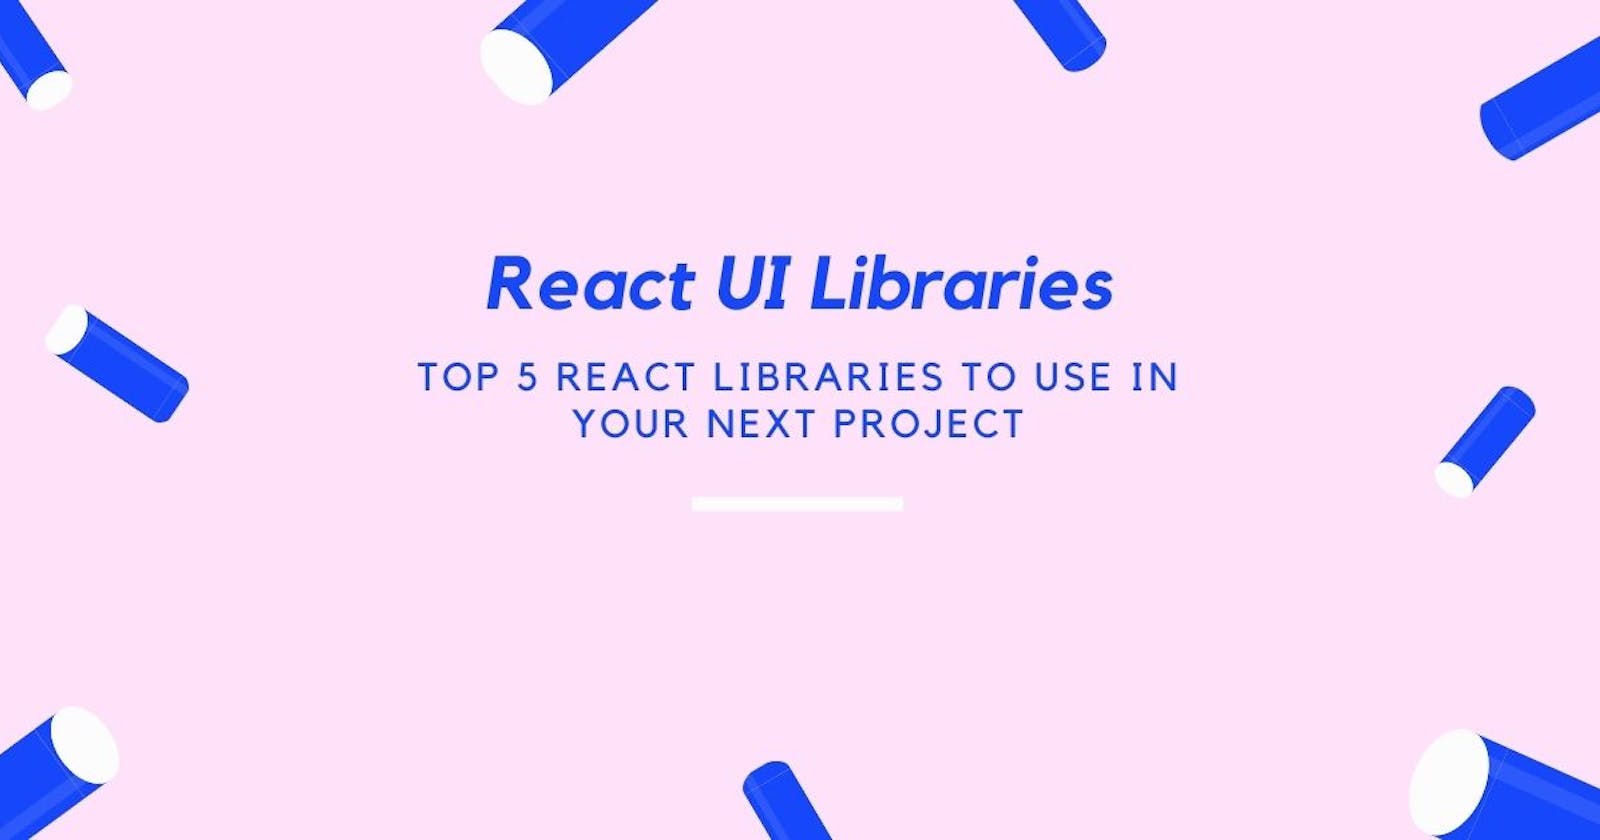 Top 5 React UI Libraries